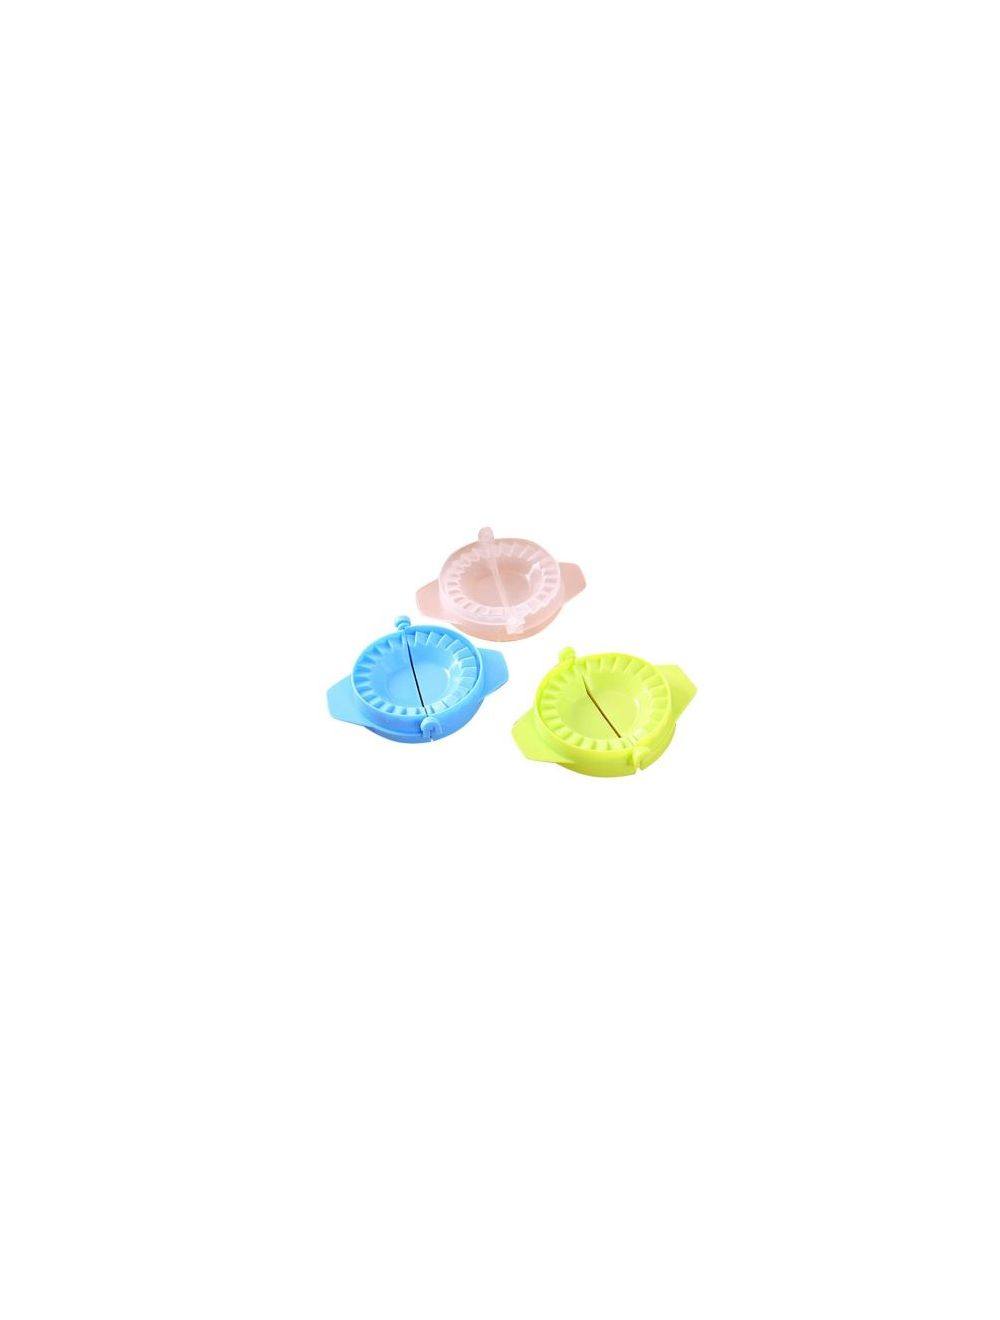 RahaLife 3-Piece Dumplings Mould Green/Blue/Transparent 11 CM-AW/DM/28